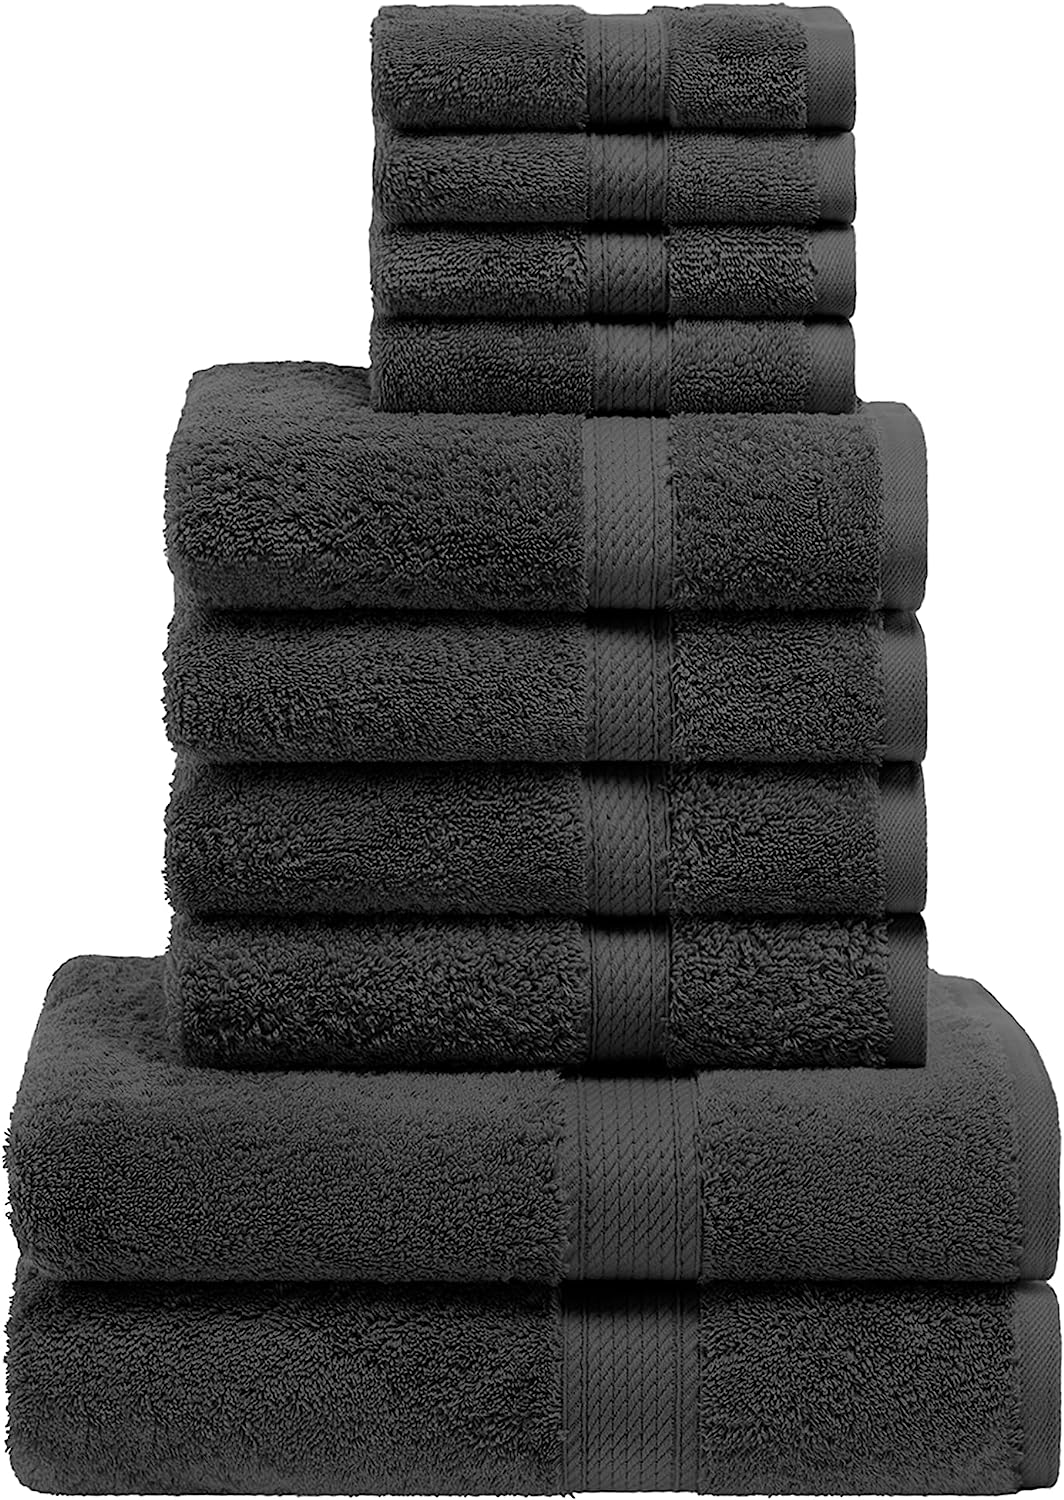 SUPERIOR Egyptian Cotton 800 GSM Bath Towel Set, Includes 2 Bath